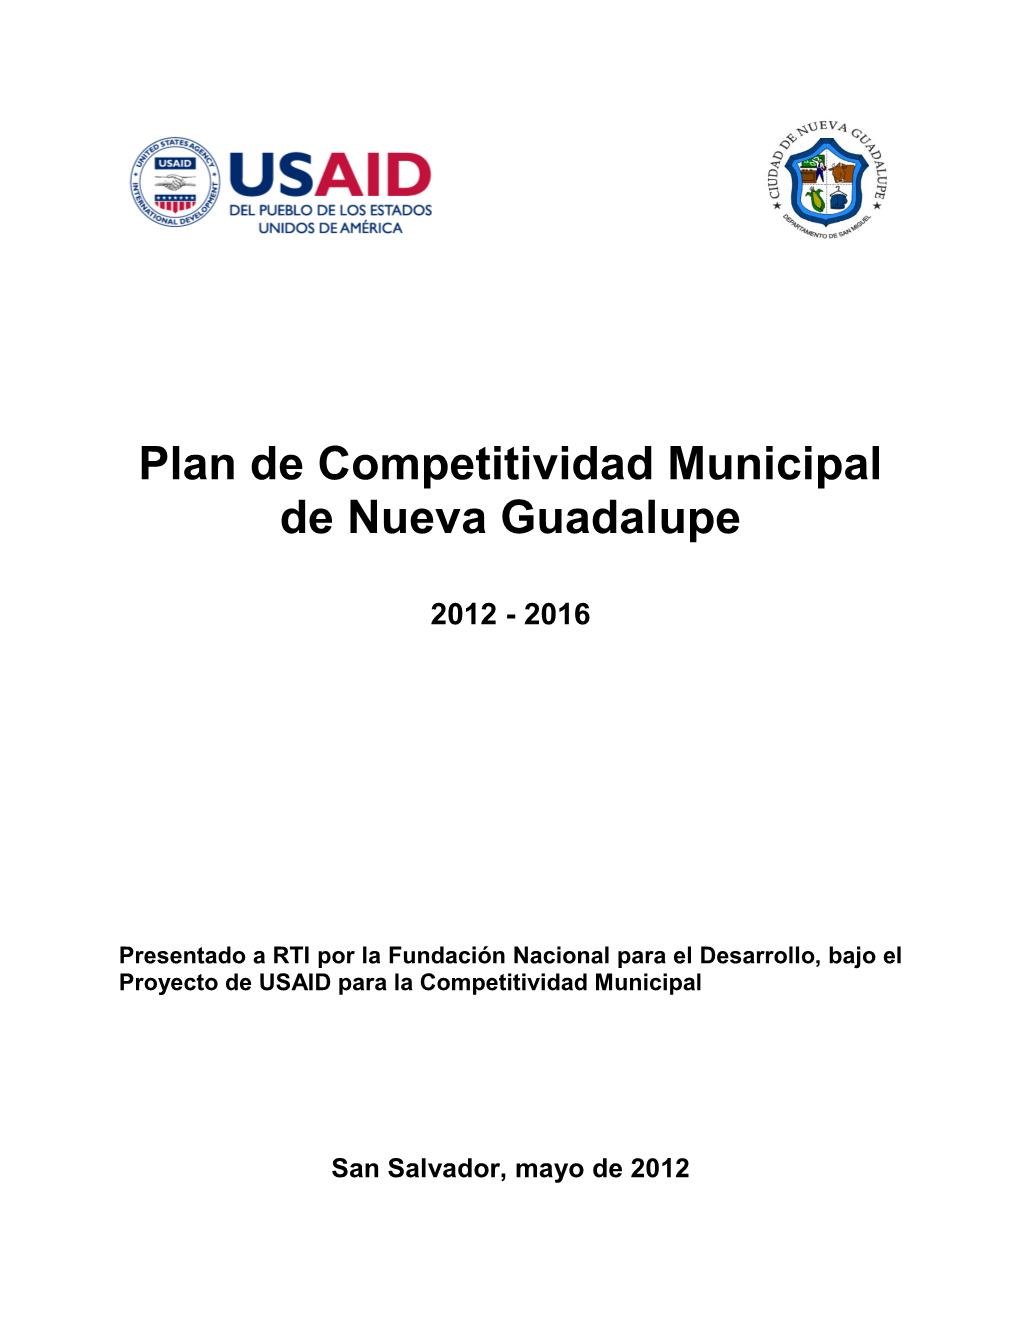 Plan De Competitividad Municipal De Nueva Guadalupe 2012 - 2016